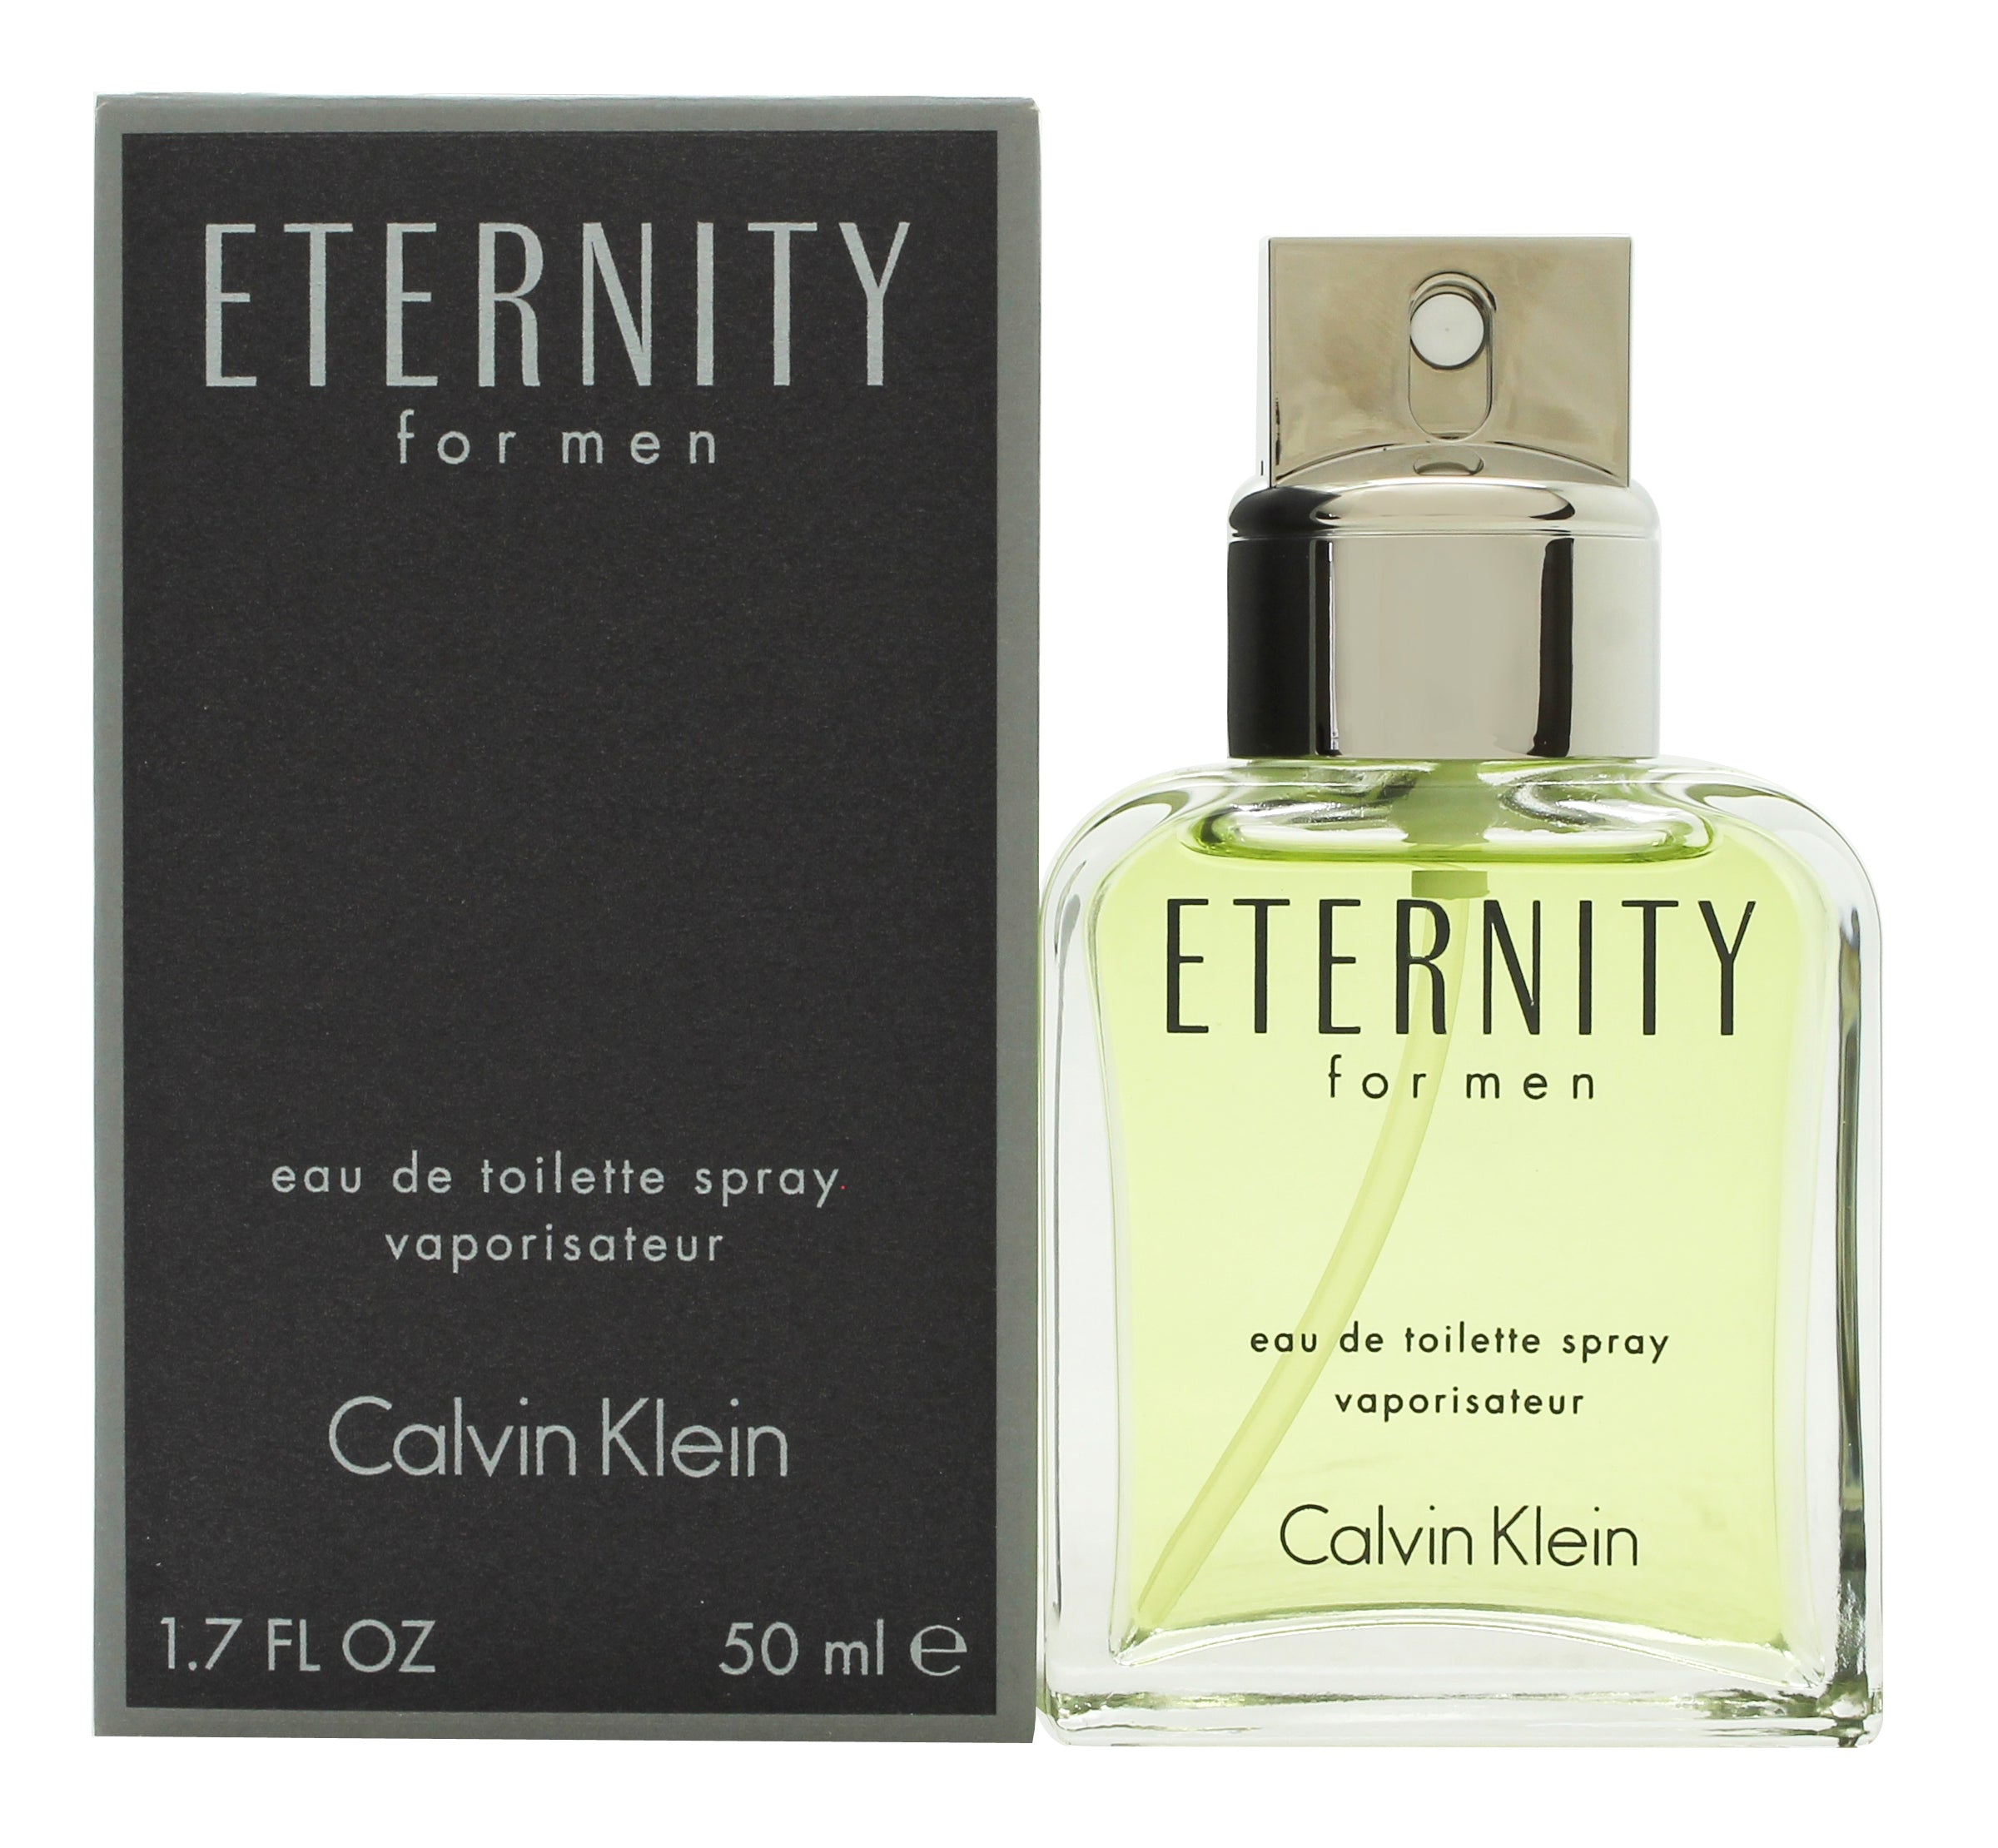 View Calvin Klein Eternity Eau de Toilette 50ml Spray information